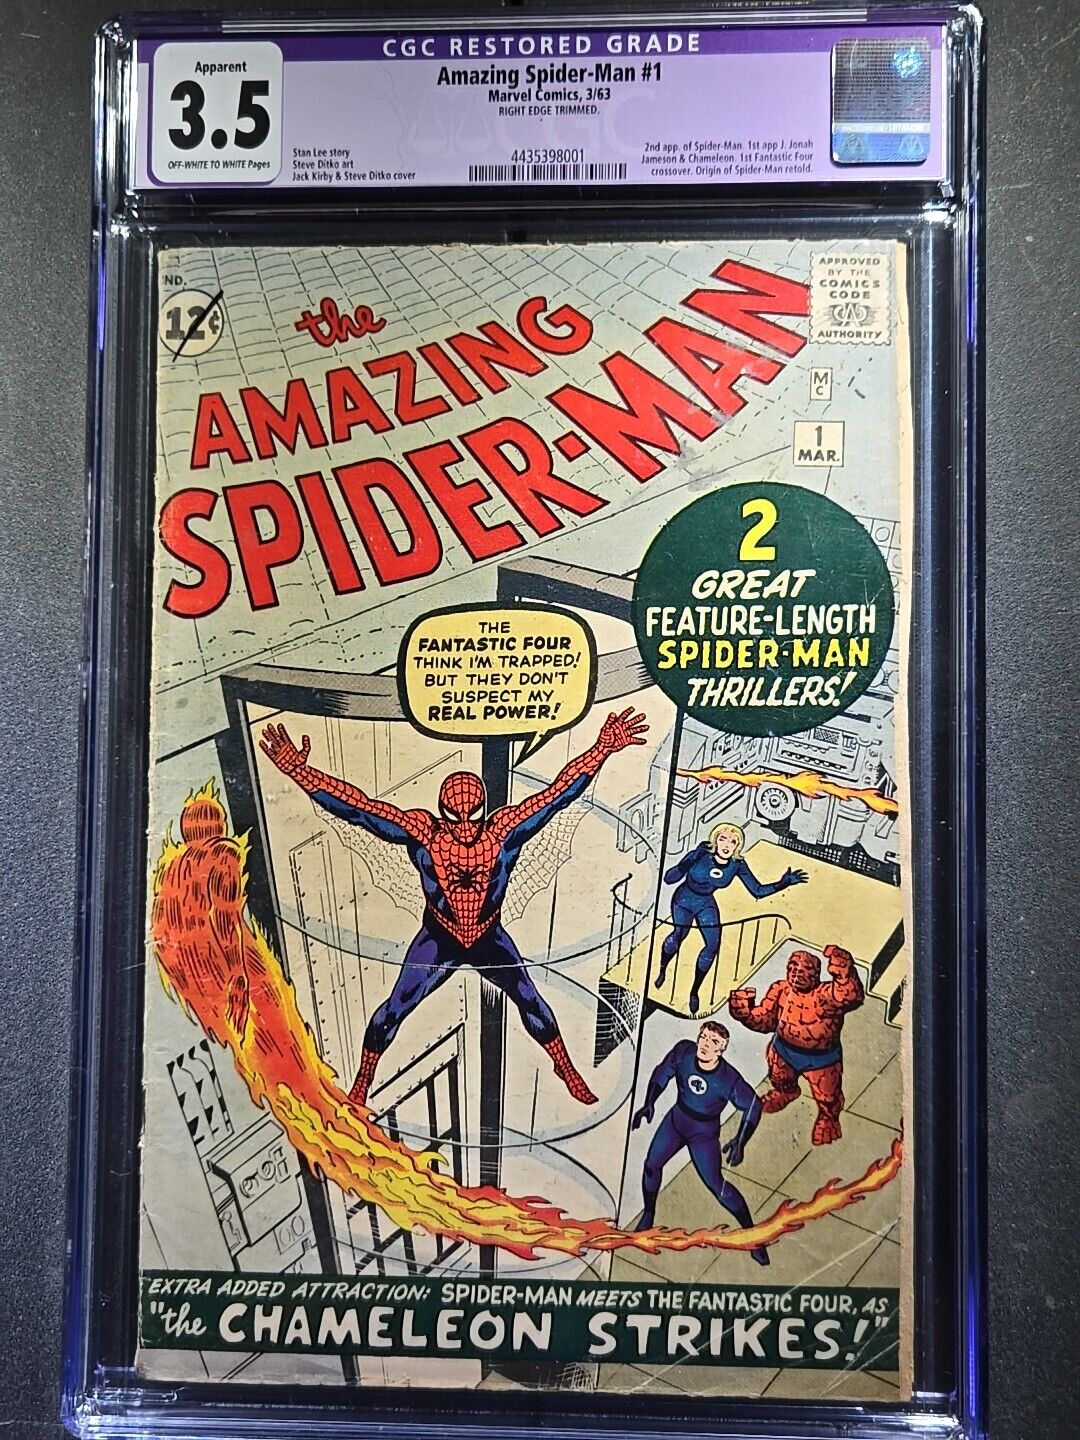 1963 AMAZING SPIDER-MAN #1 - 2nd Spiderman - FF - CGC 3.5 (apparent - trimmed)